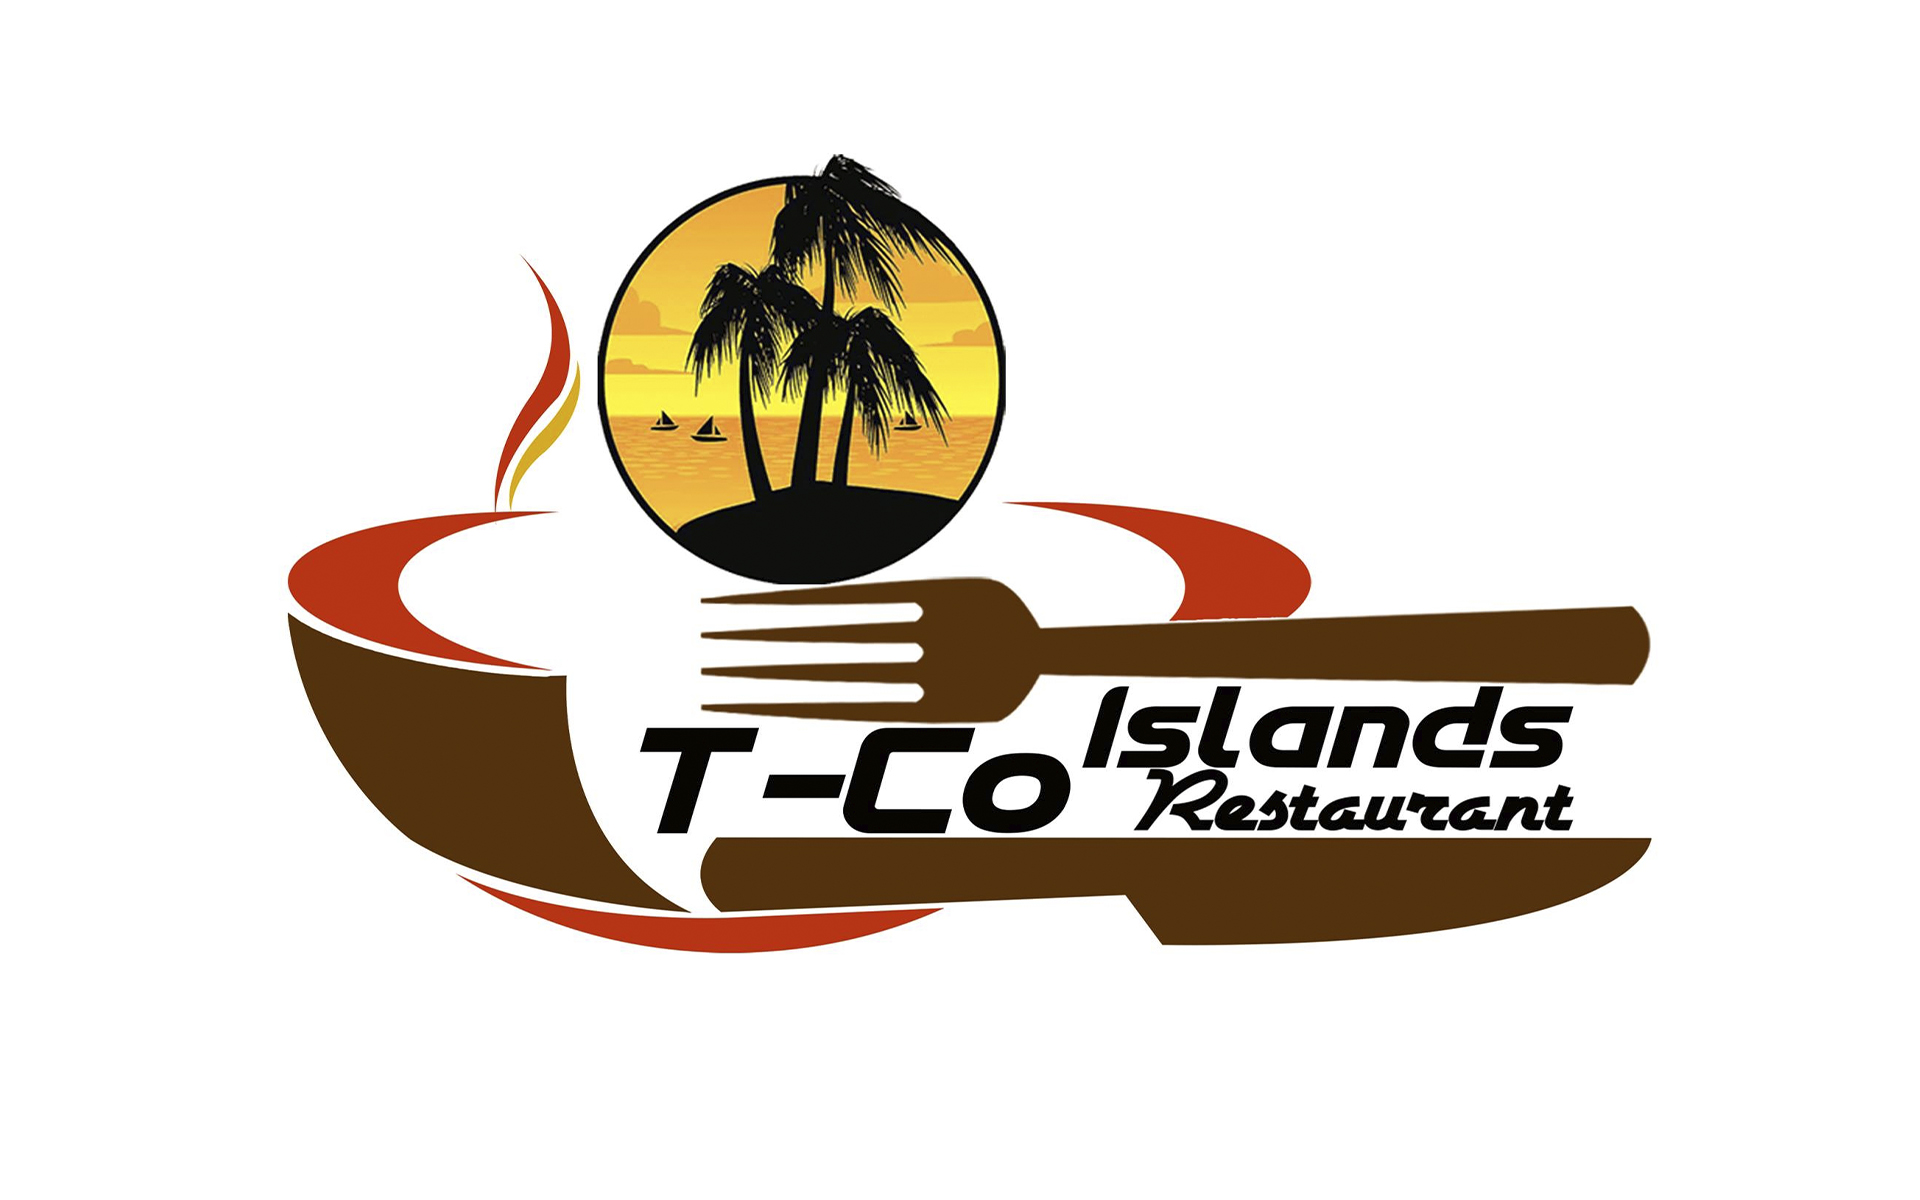 T-CO Islands Restaurant Logo